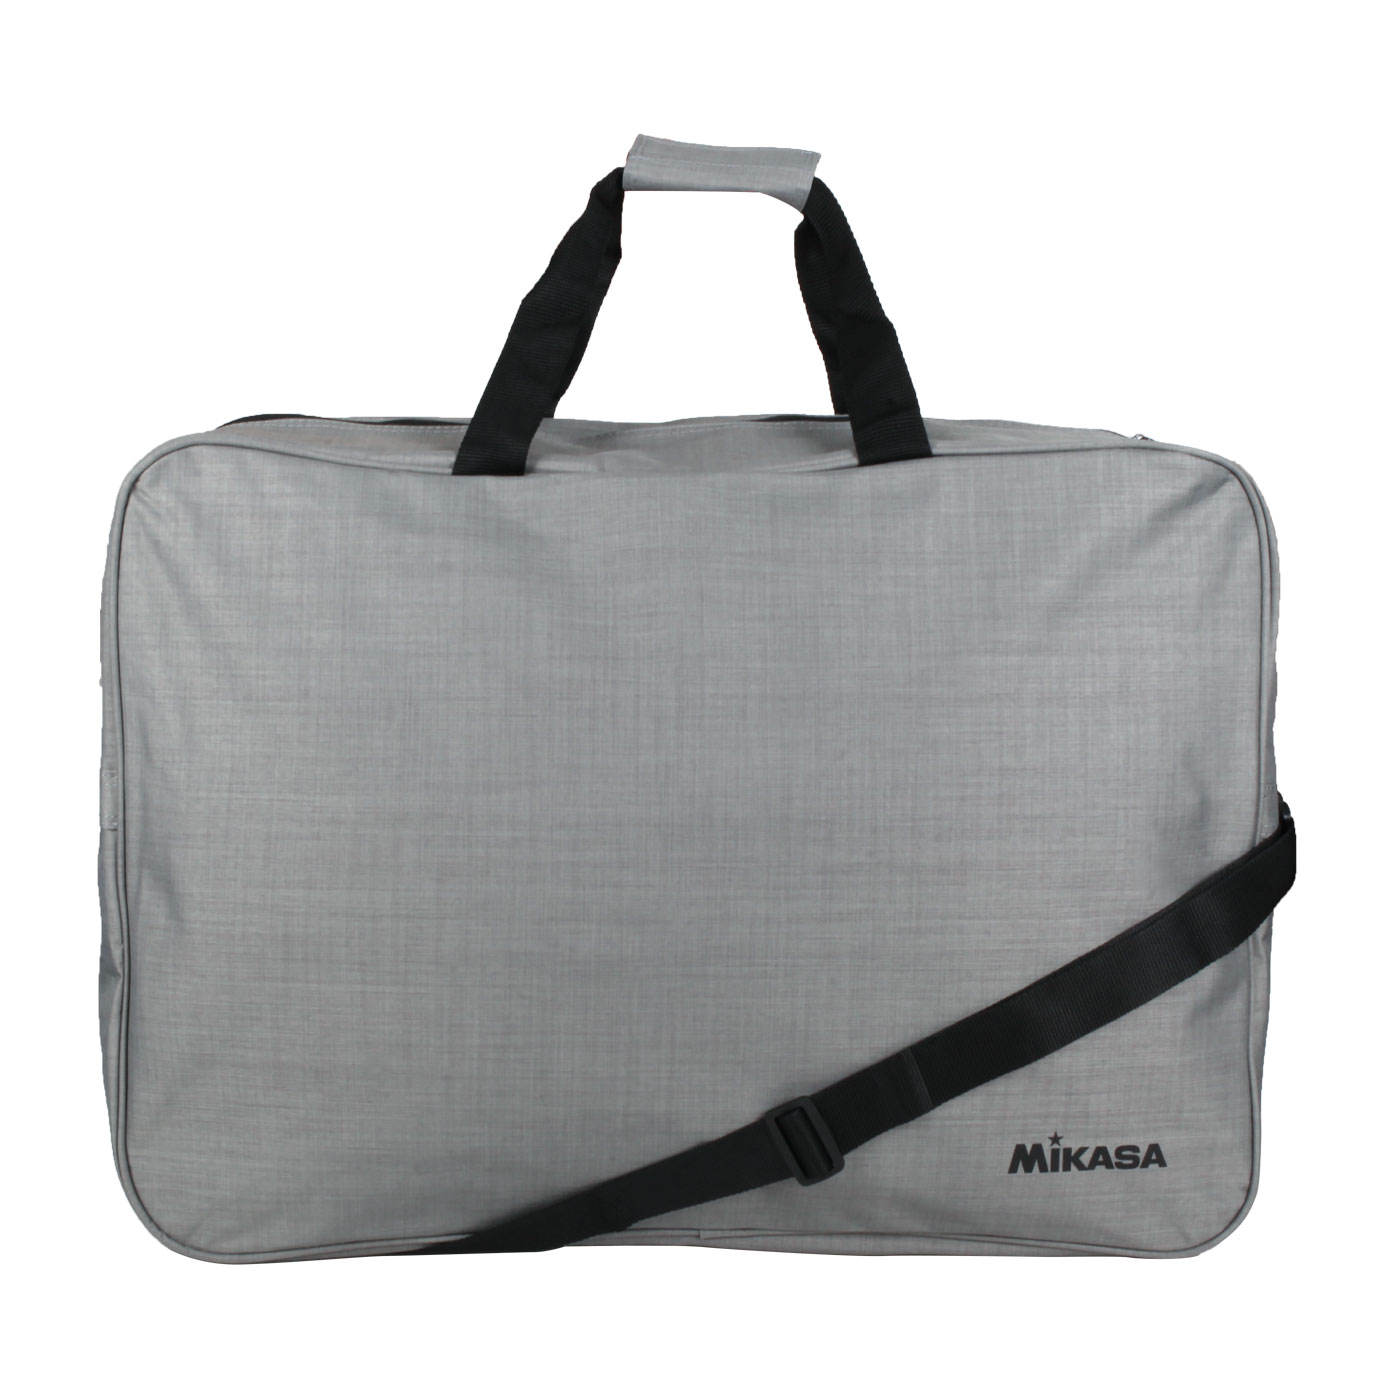 MIKASA 排球袋(6顆裝) MKAGBGM60W - 灰黑